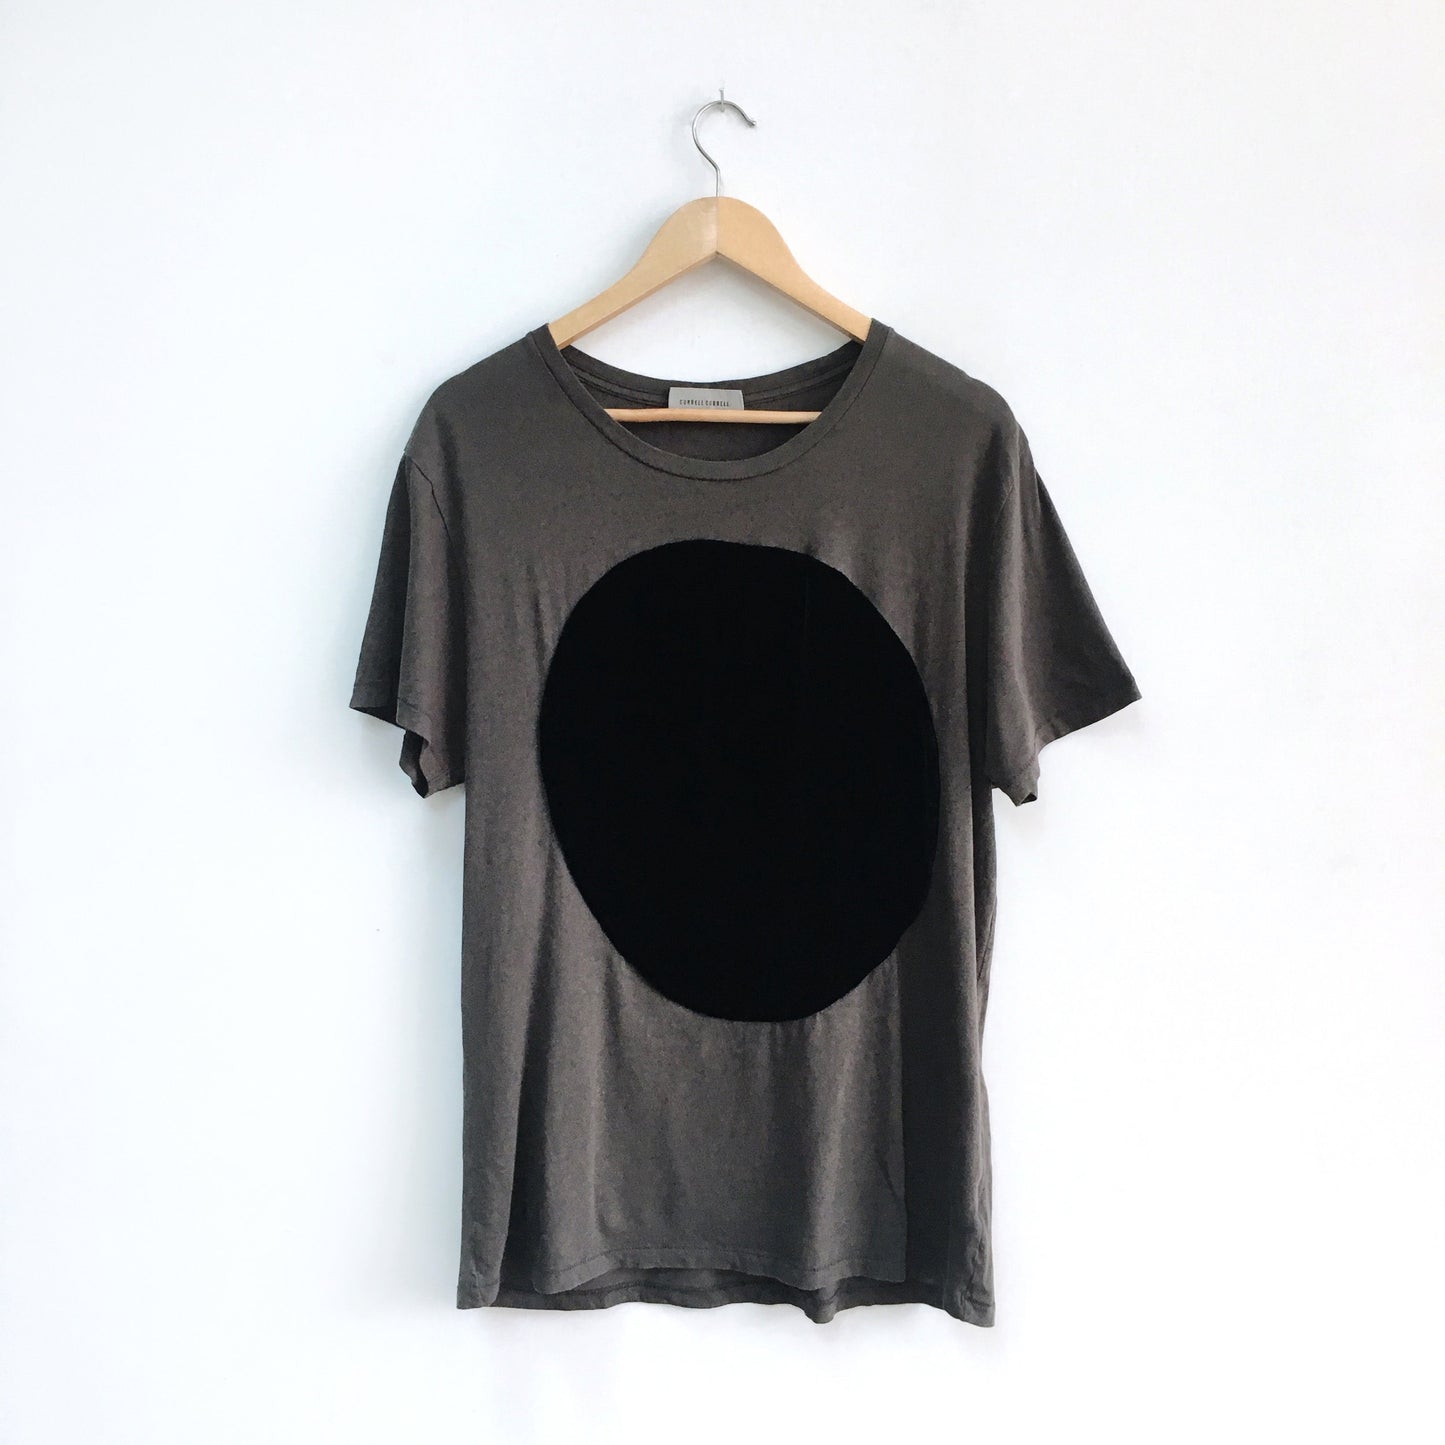 Correll Correll Velvet Circle T-shirt - size Medium